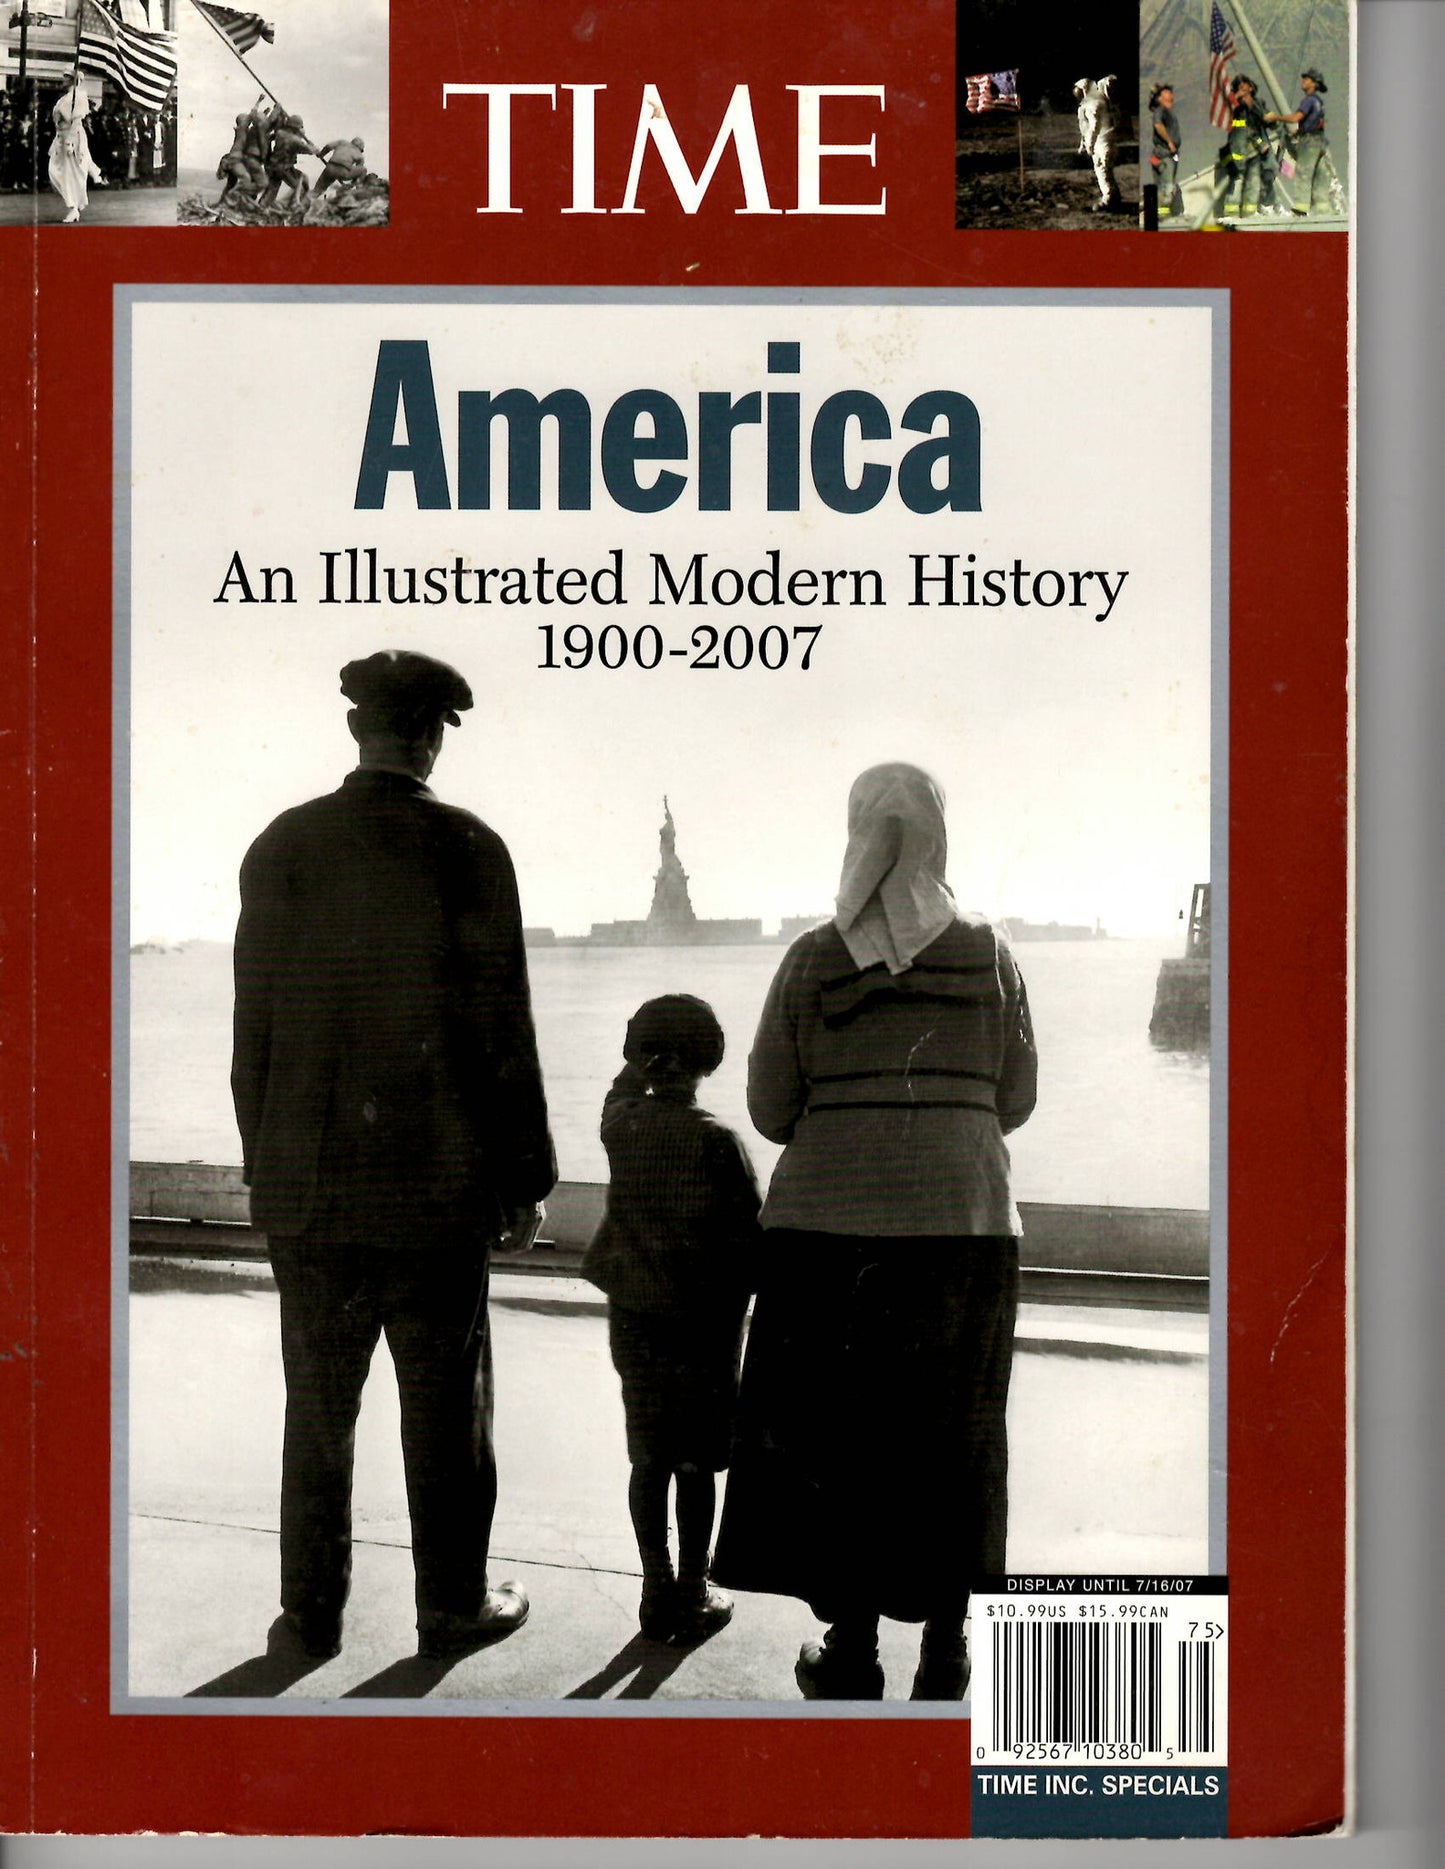 07 16 2007 Time Inc Specials - America